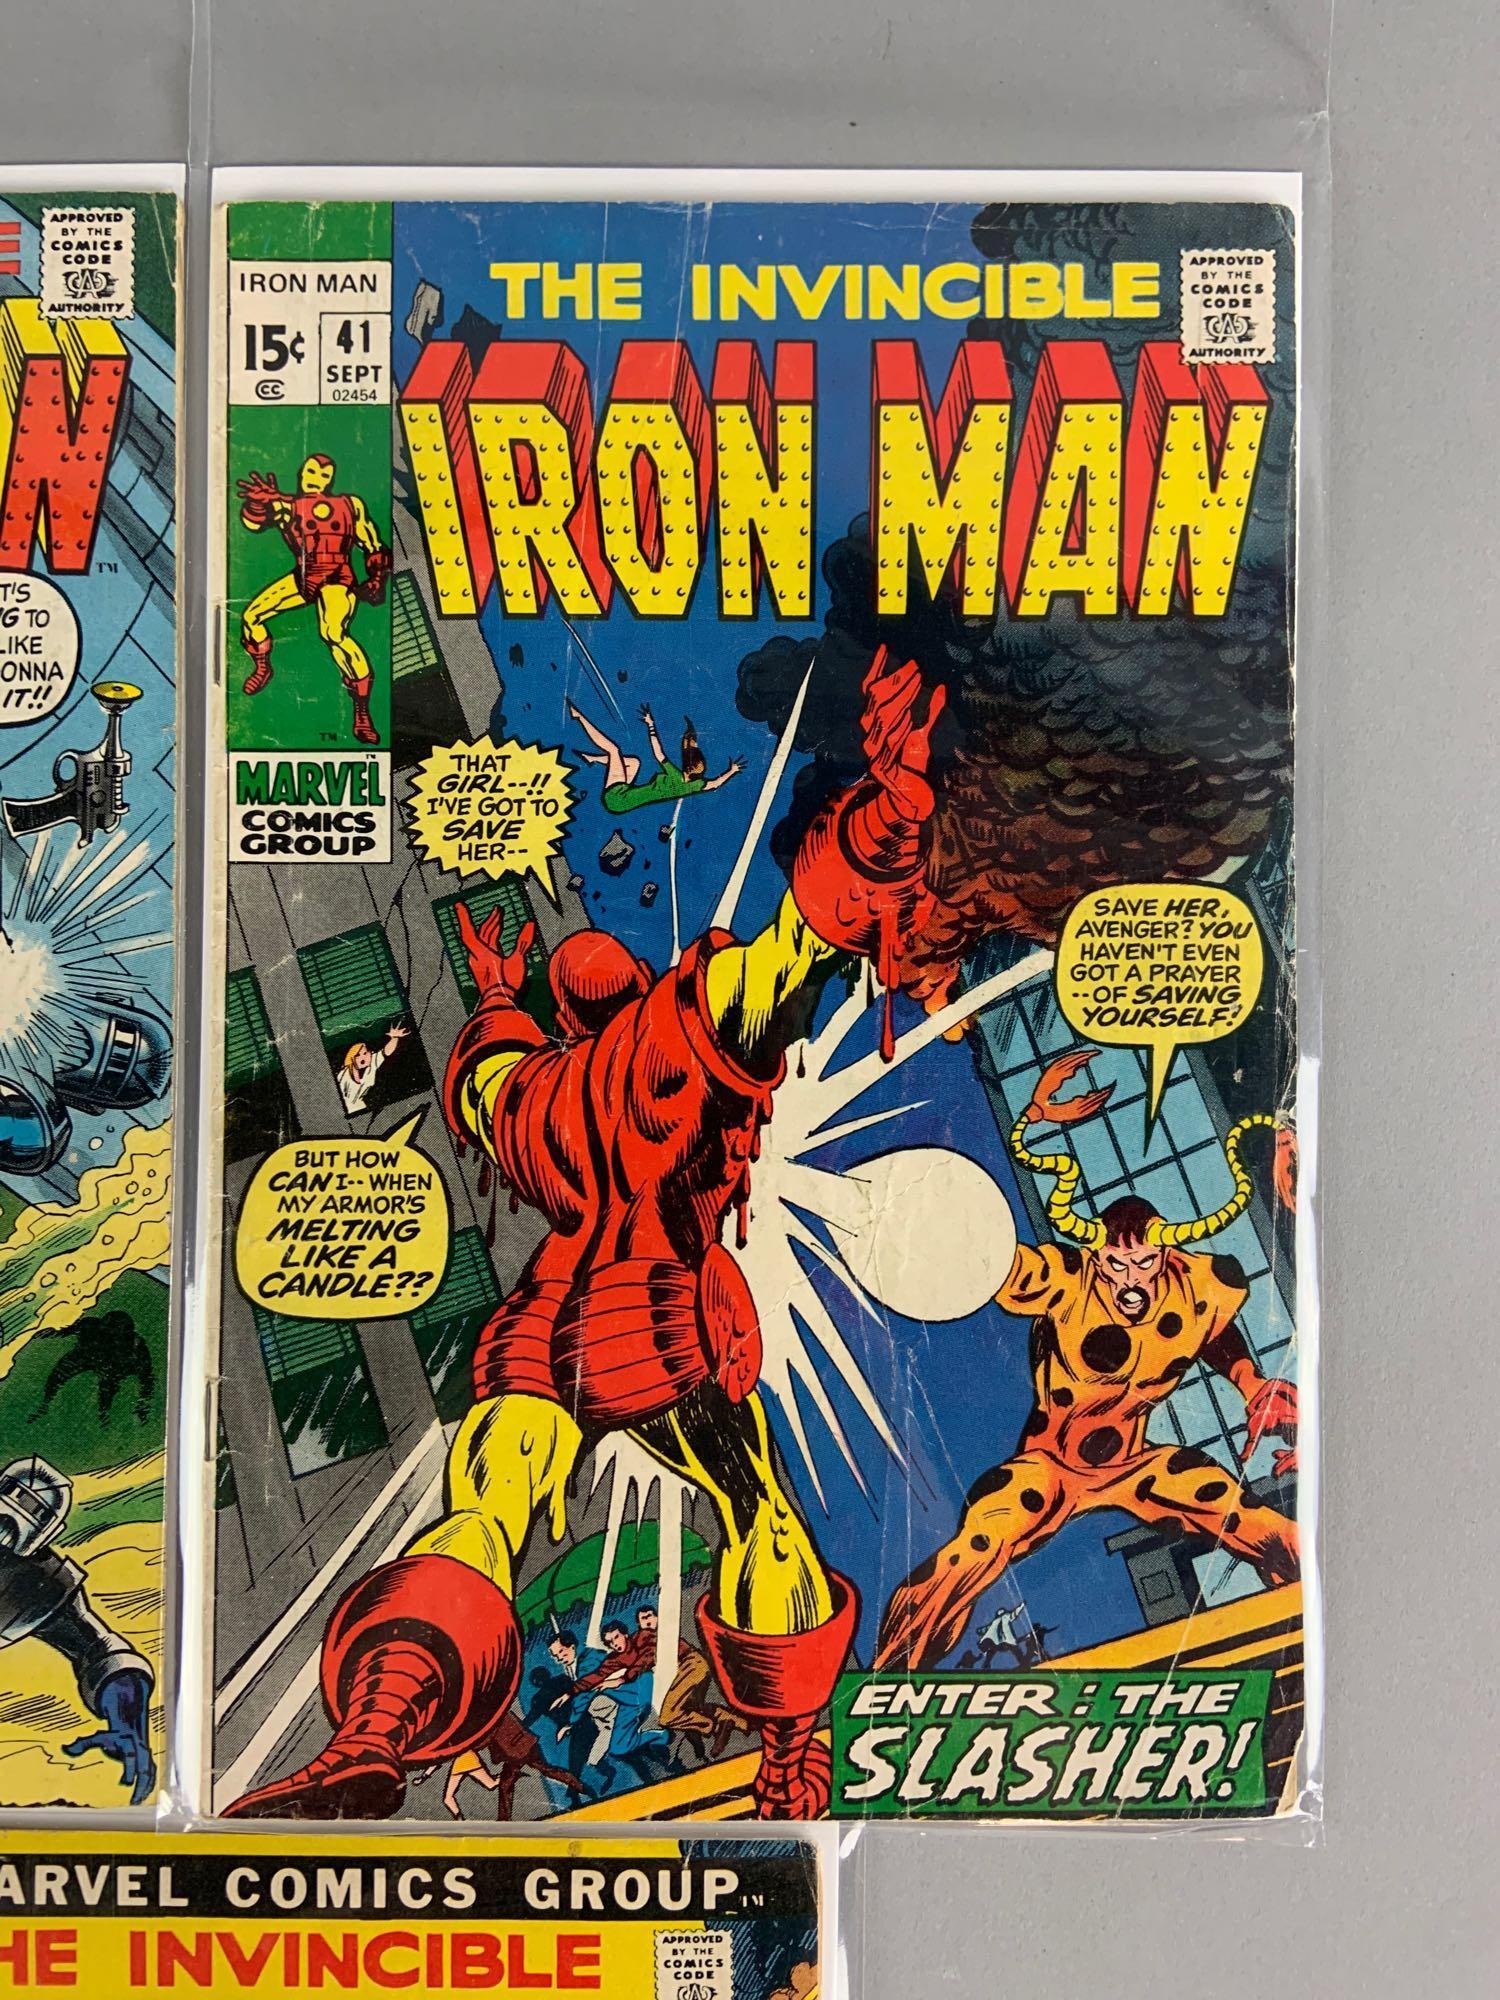 Group of 5 Marvel Comics The Invincible Iron Man Comic Books